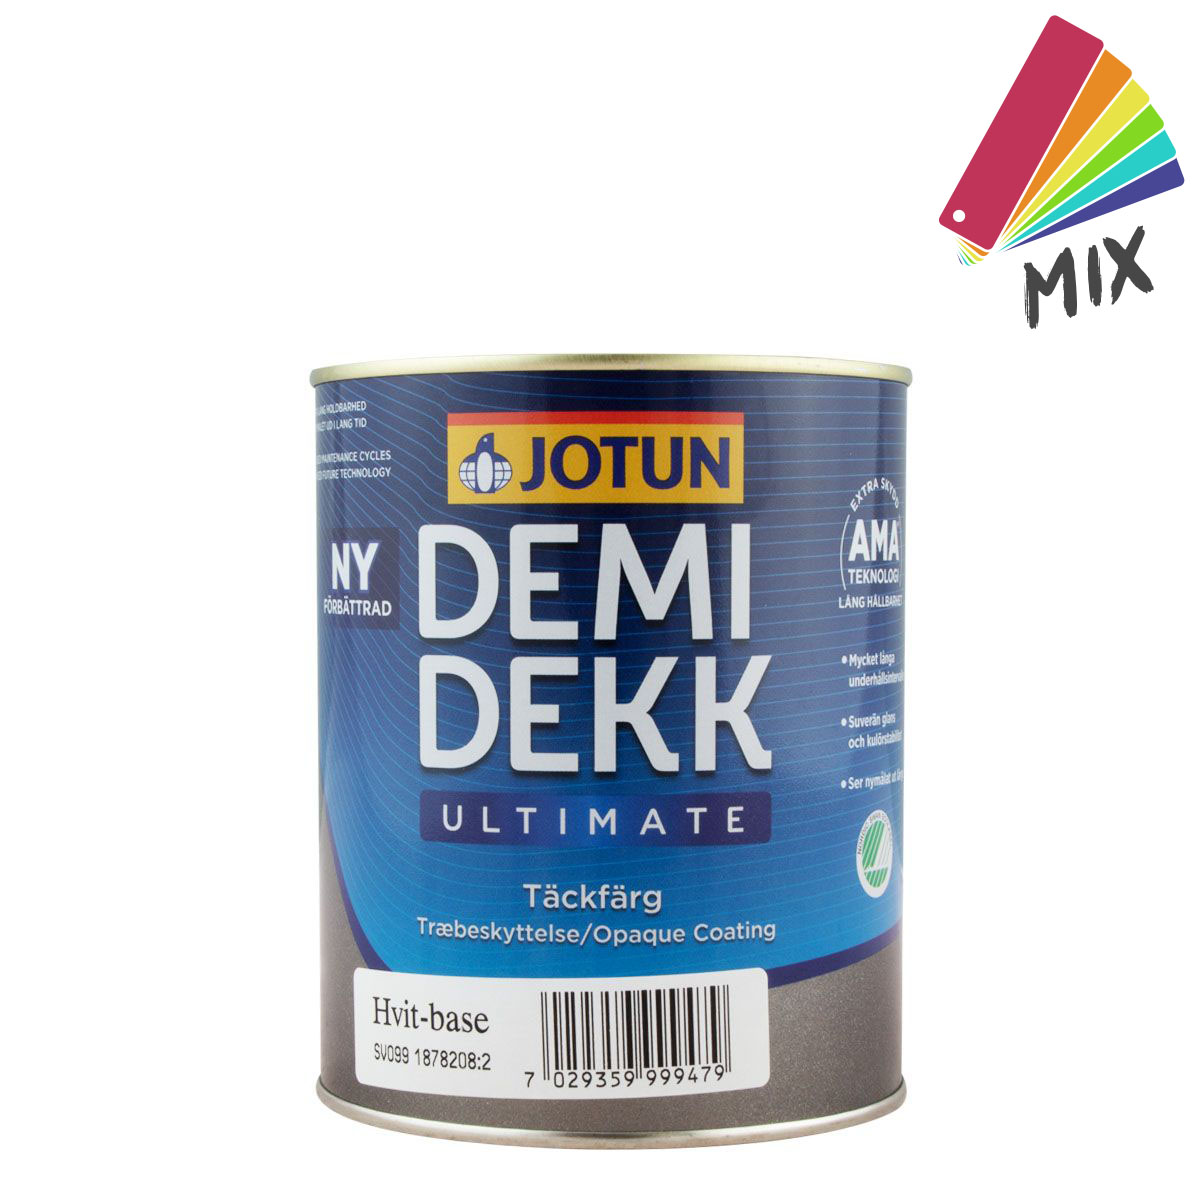 Jotun Demidekk Ultimate TÄCKFÄRG 750ml MIX, Deckfarbe